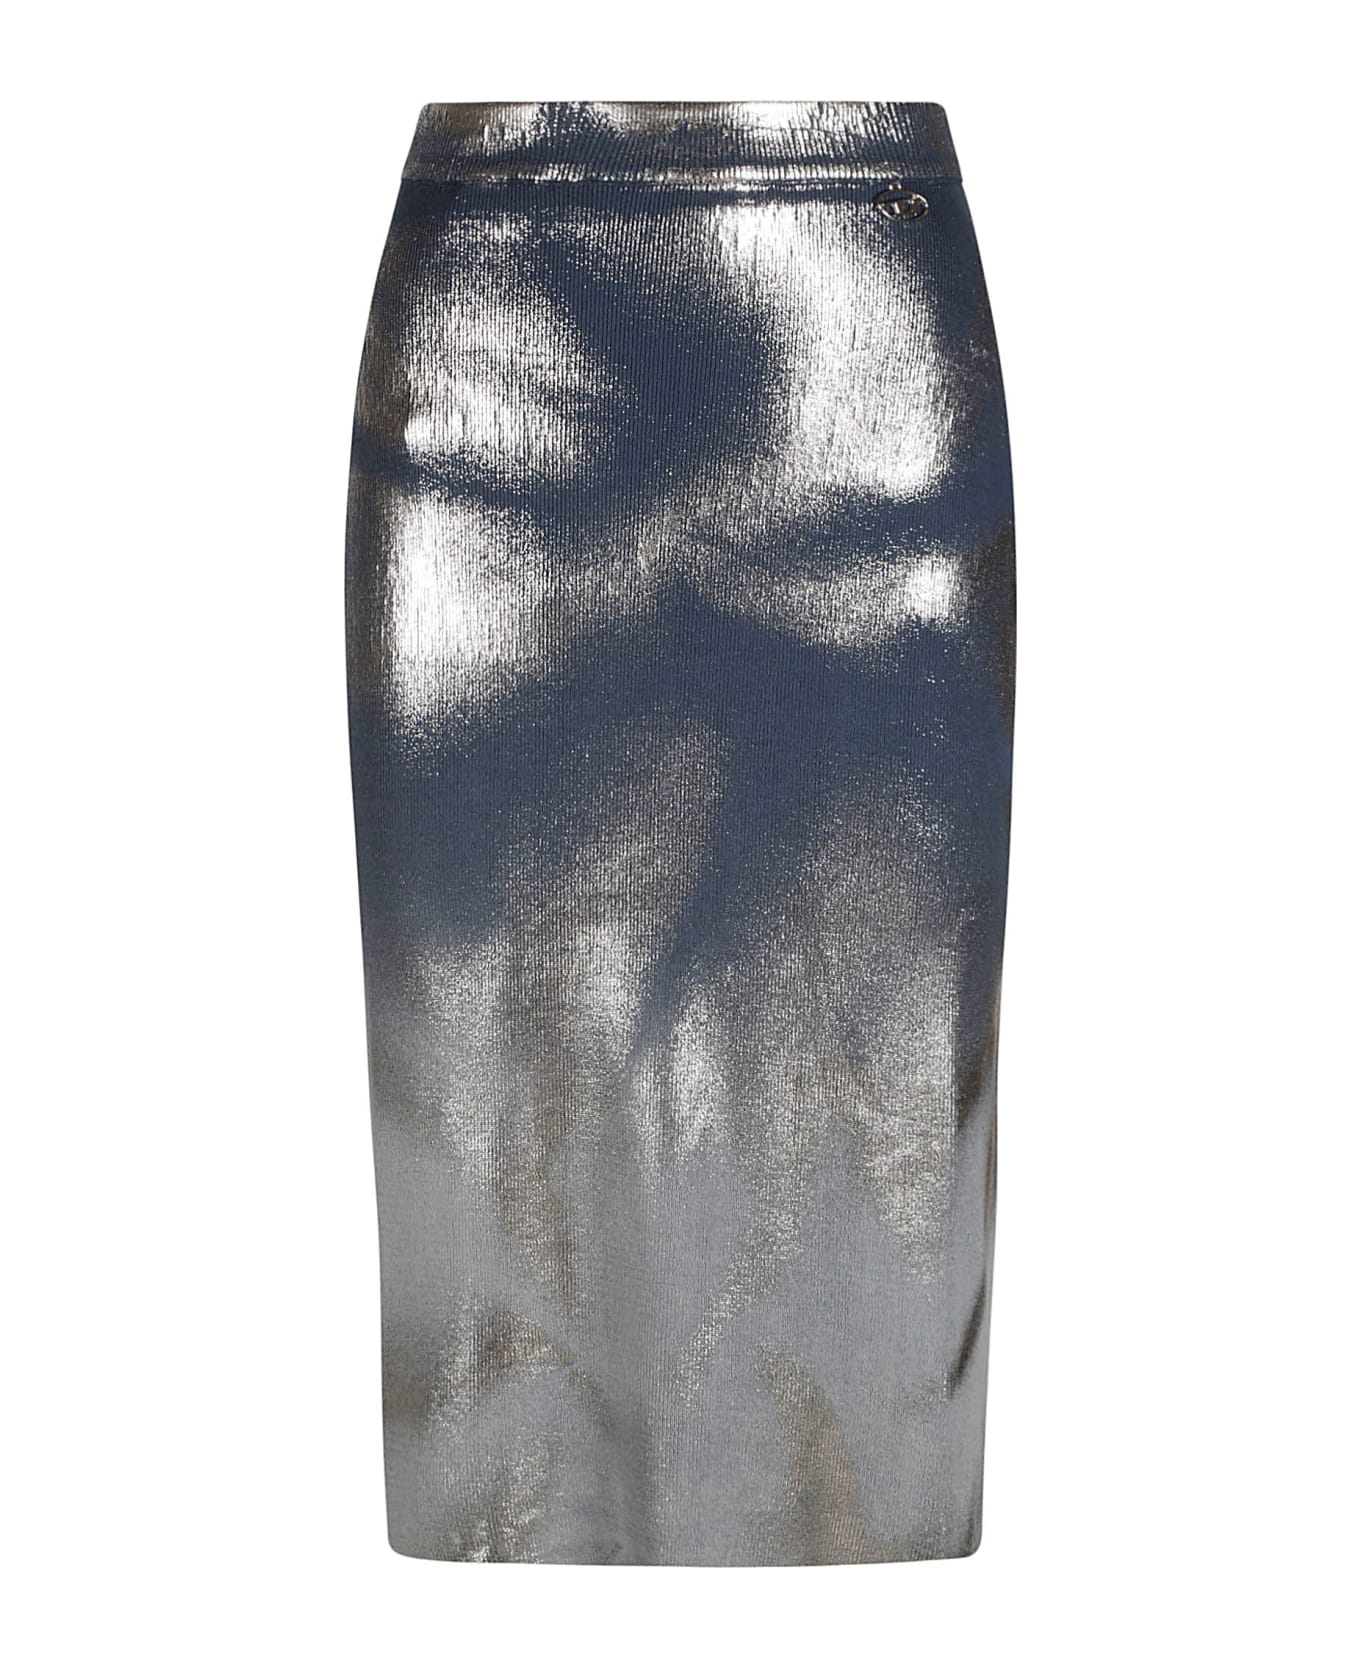 Diesel Metallic Skirt - Non definito